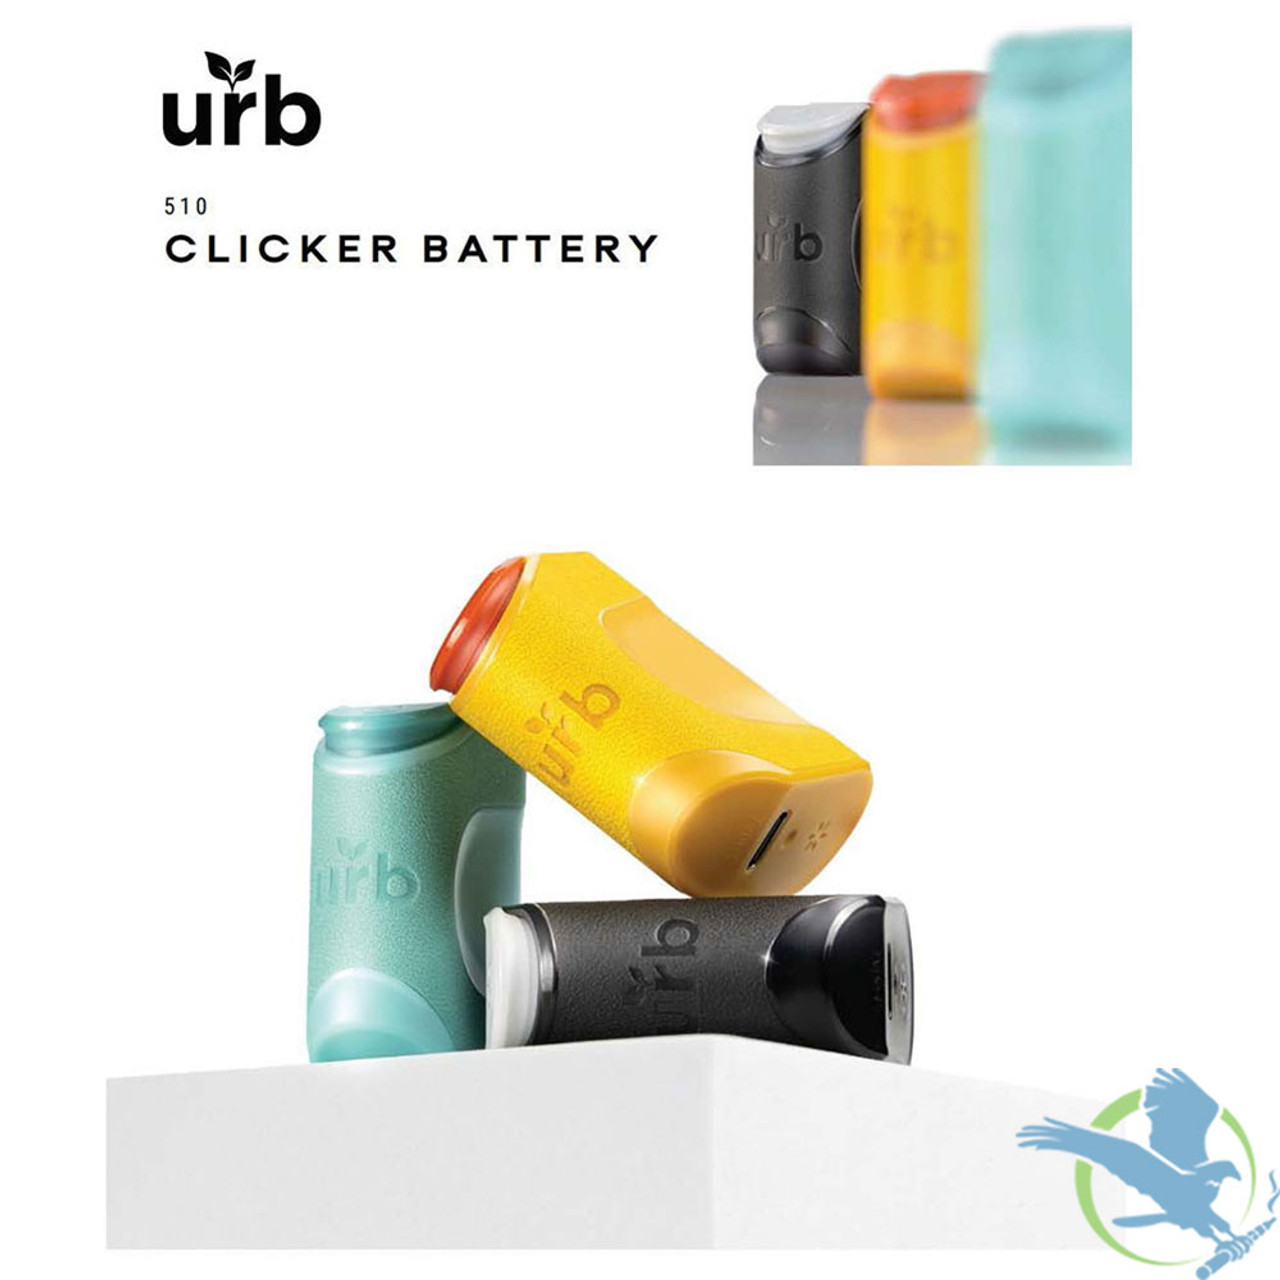 Urb Clicker 650mAh Variable Voltage 510 Battery